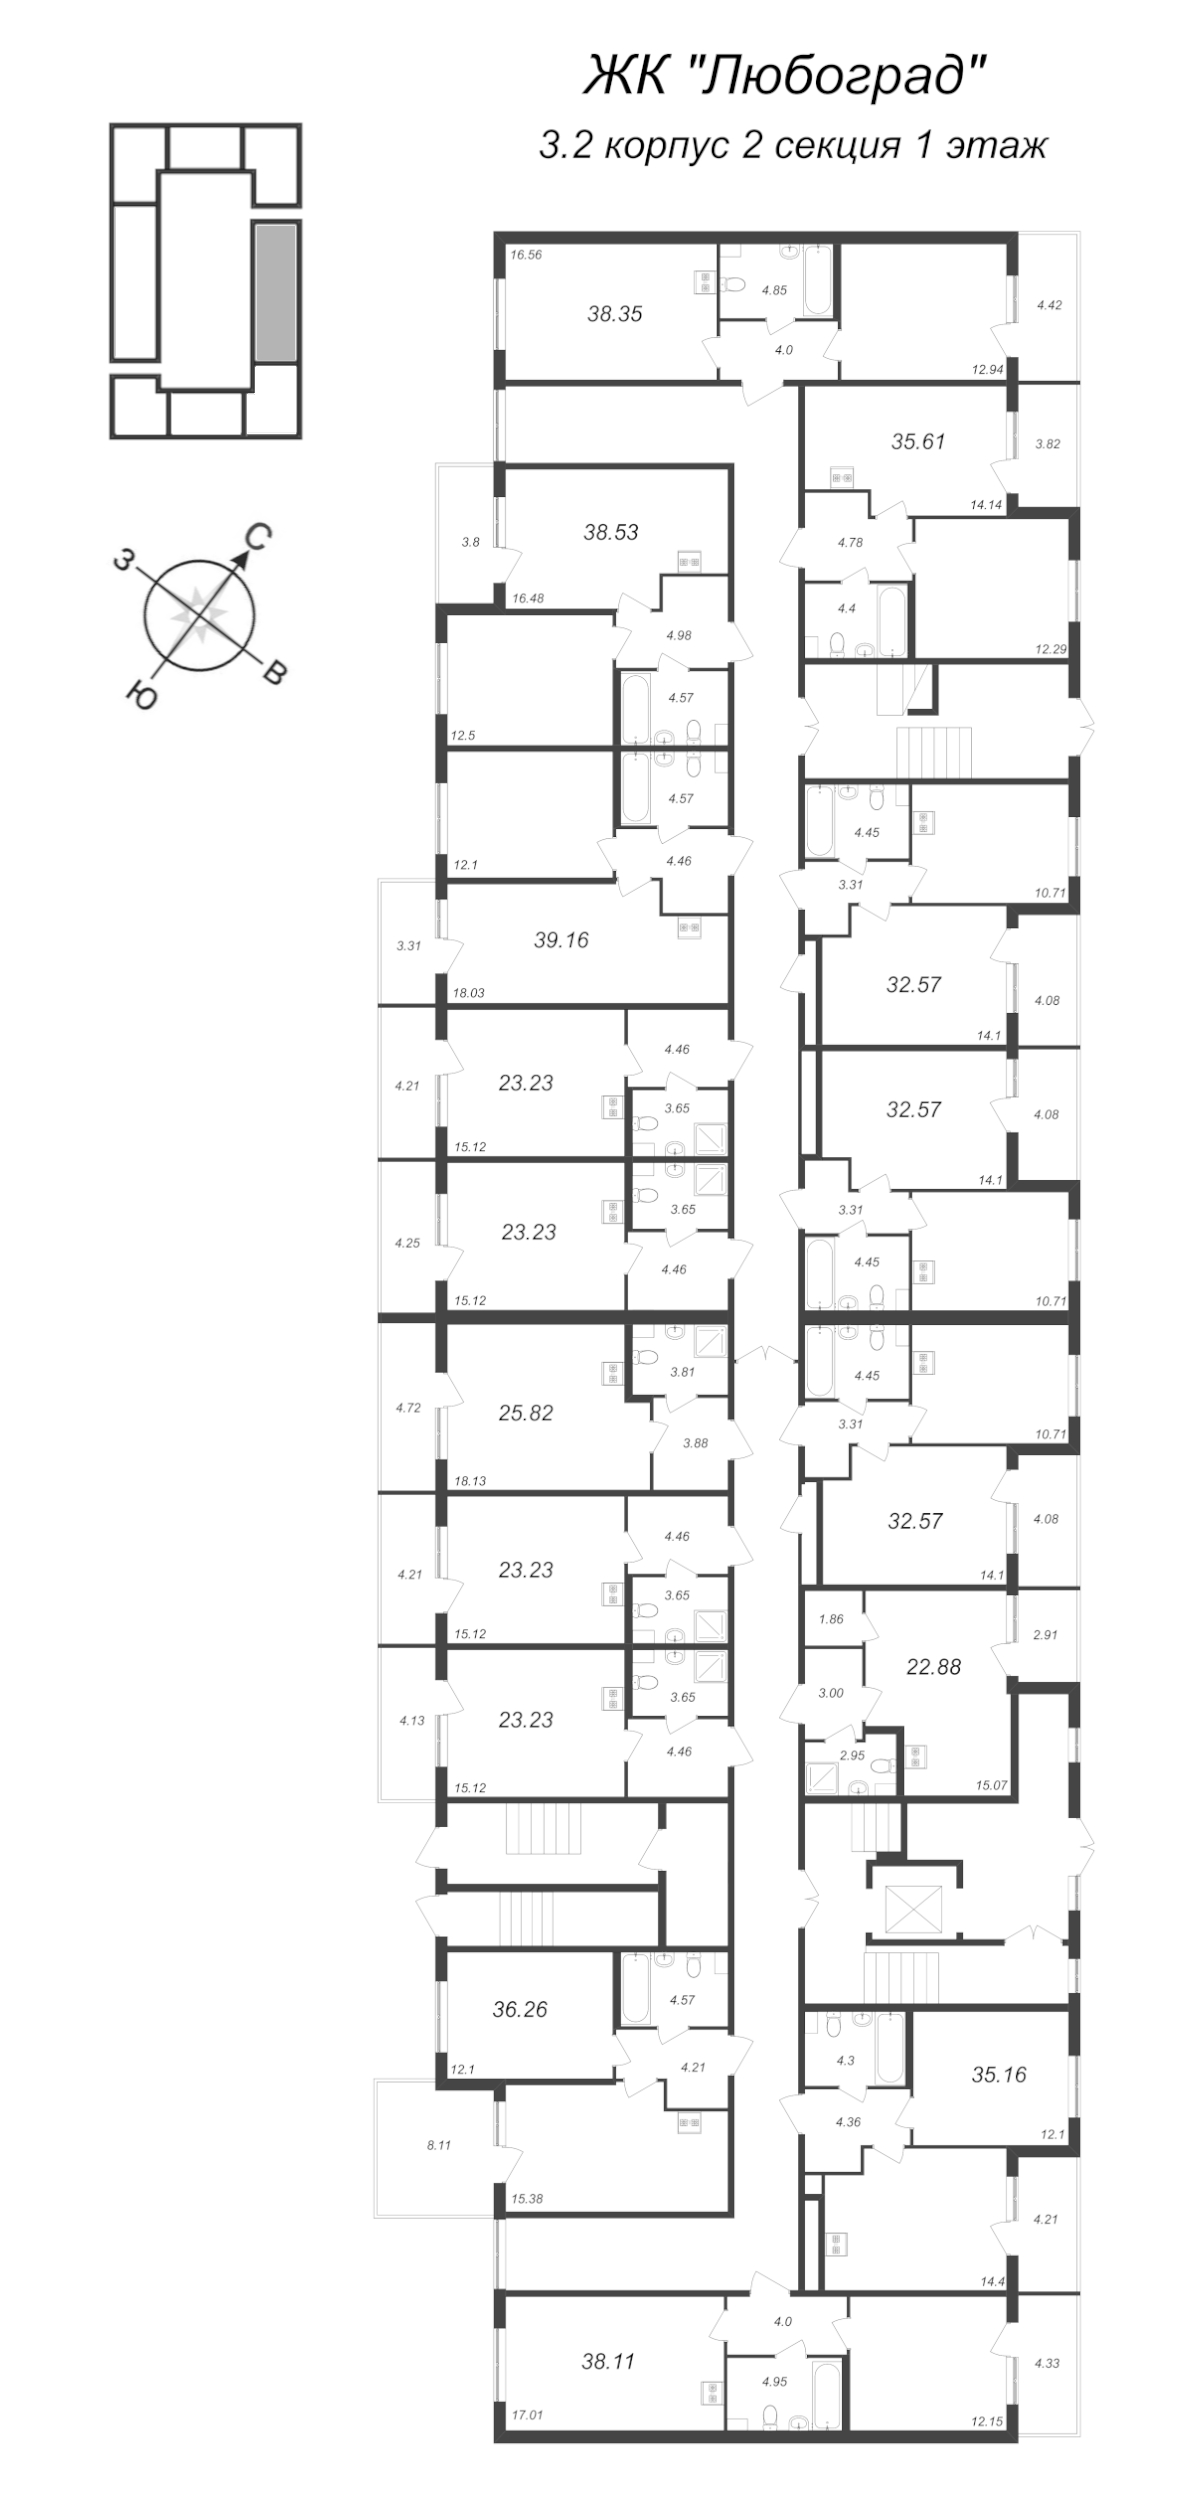 2-комнатная (Евро) квартира, 38.53 м² - планировка этажа